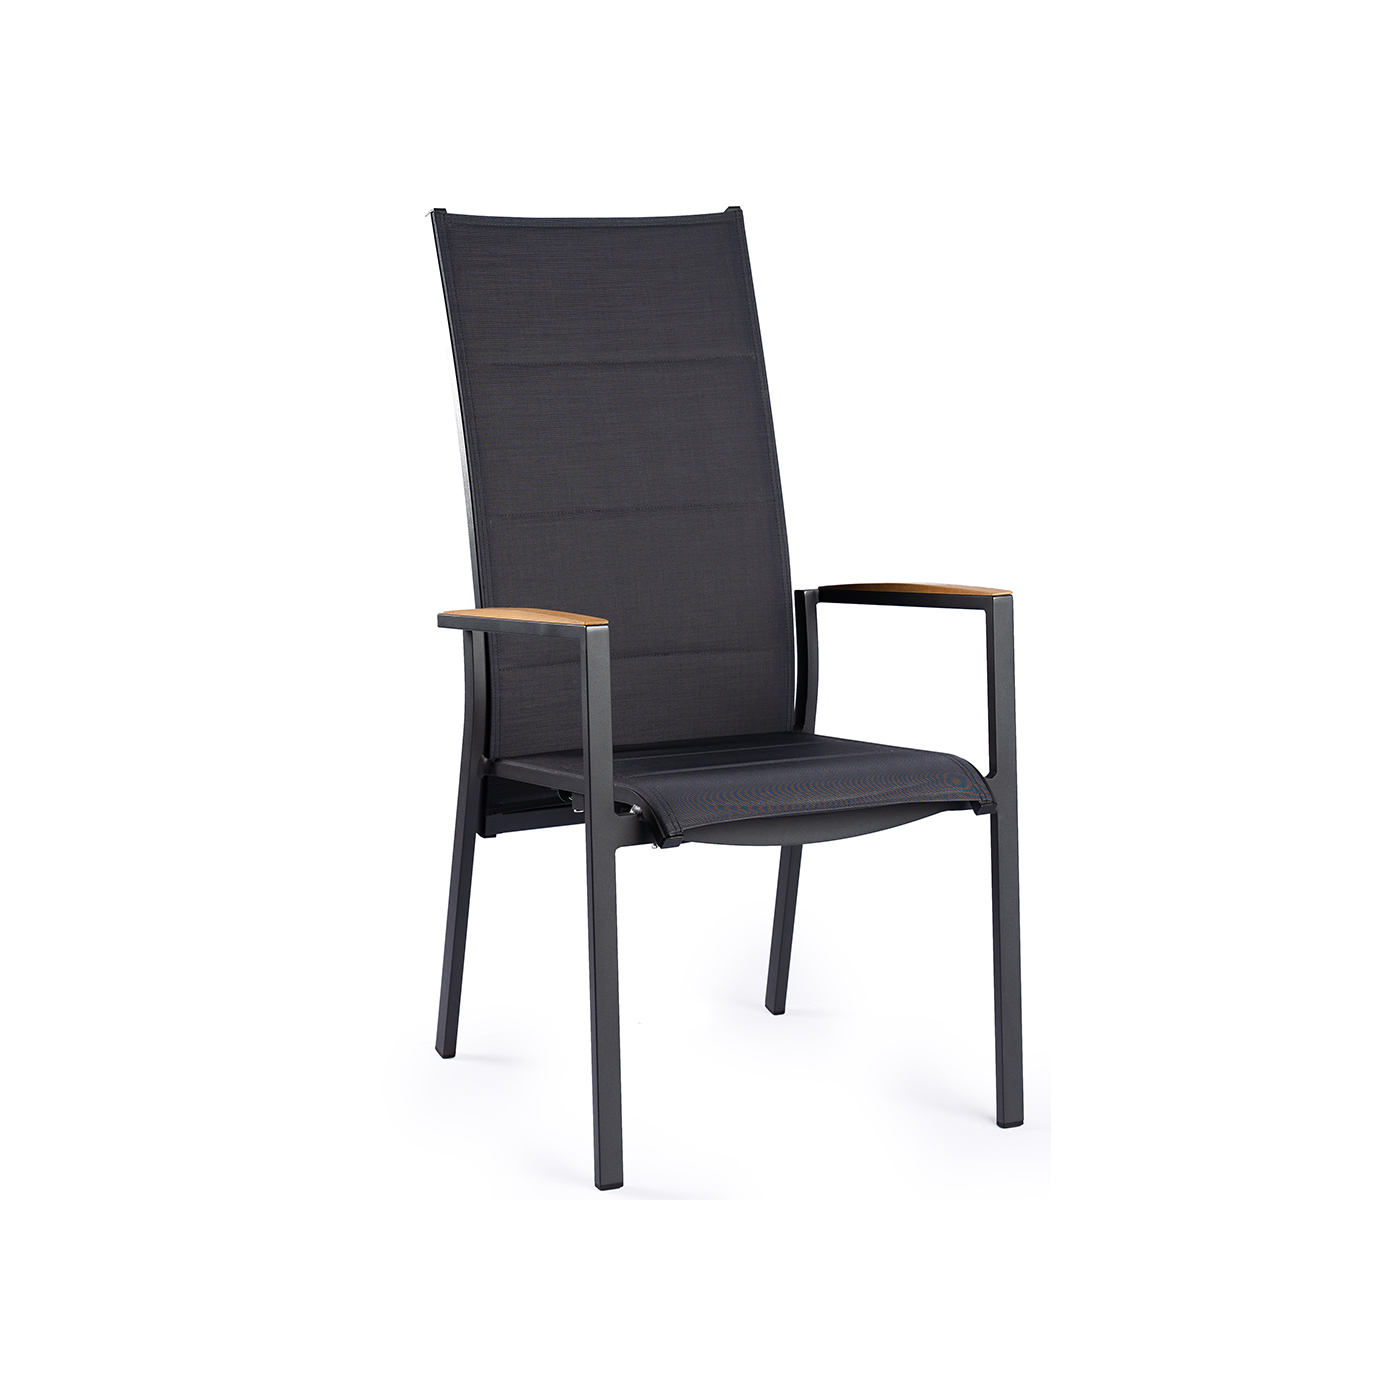 Foxx Teak High Back Stackable Adjustable Chair Charcoal